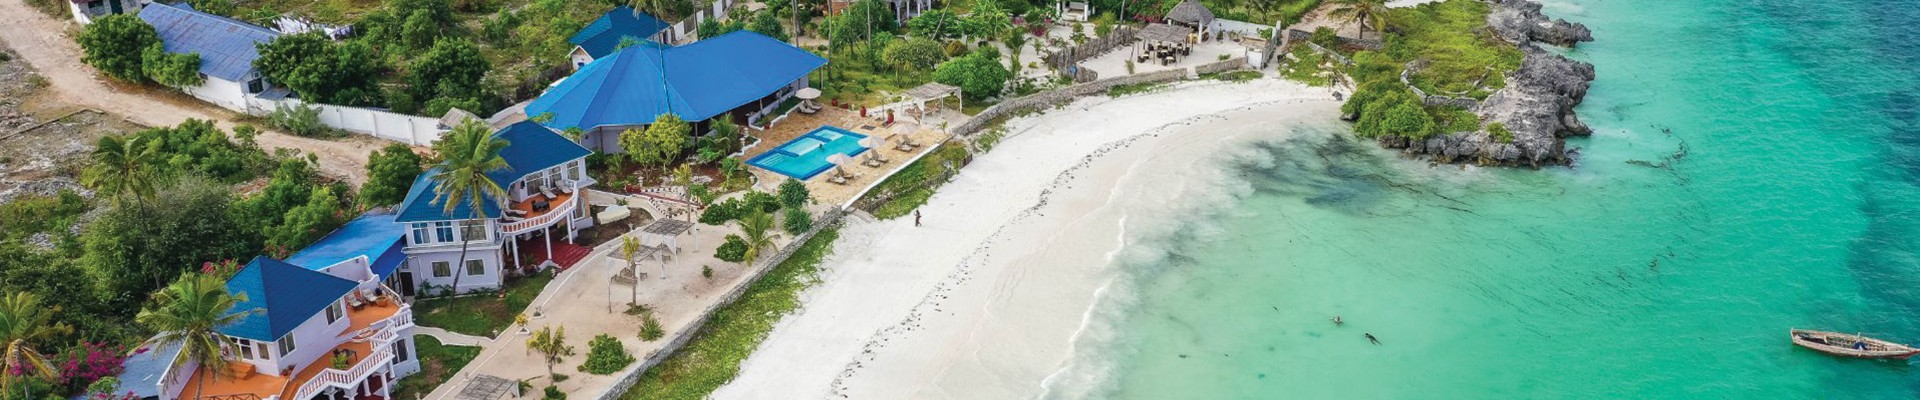 4* Jafferji Beach Retreat - Zanzibar Package (5 Nights)